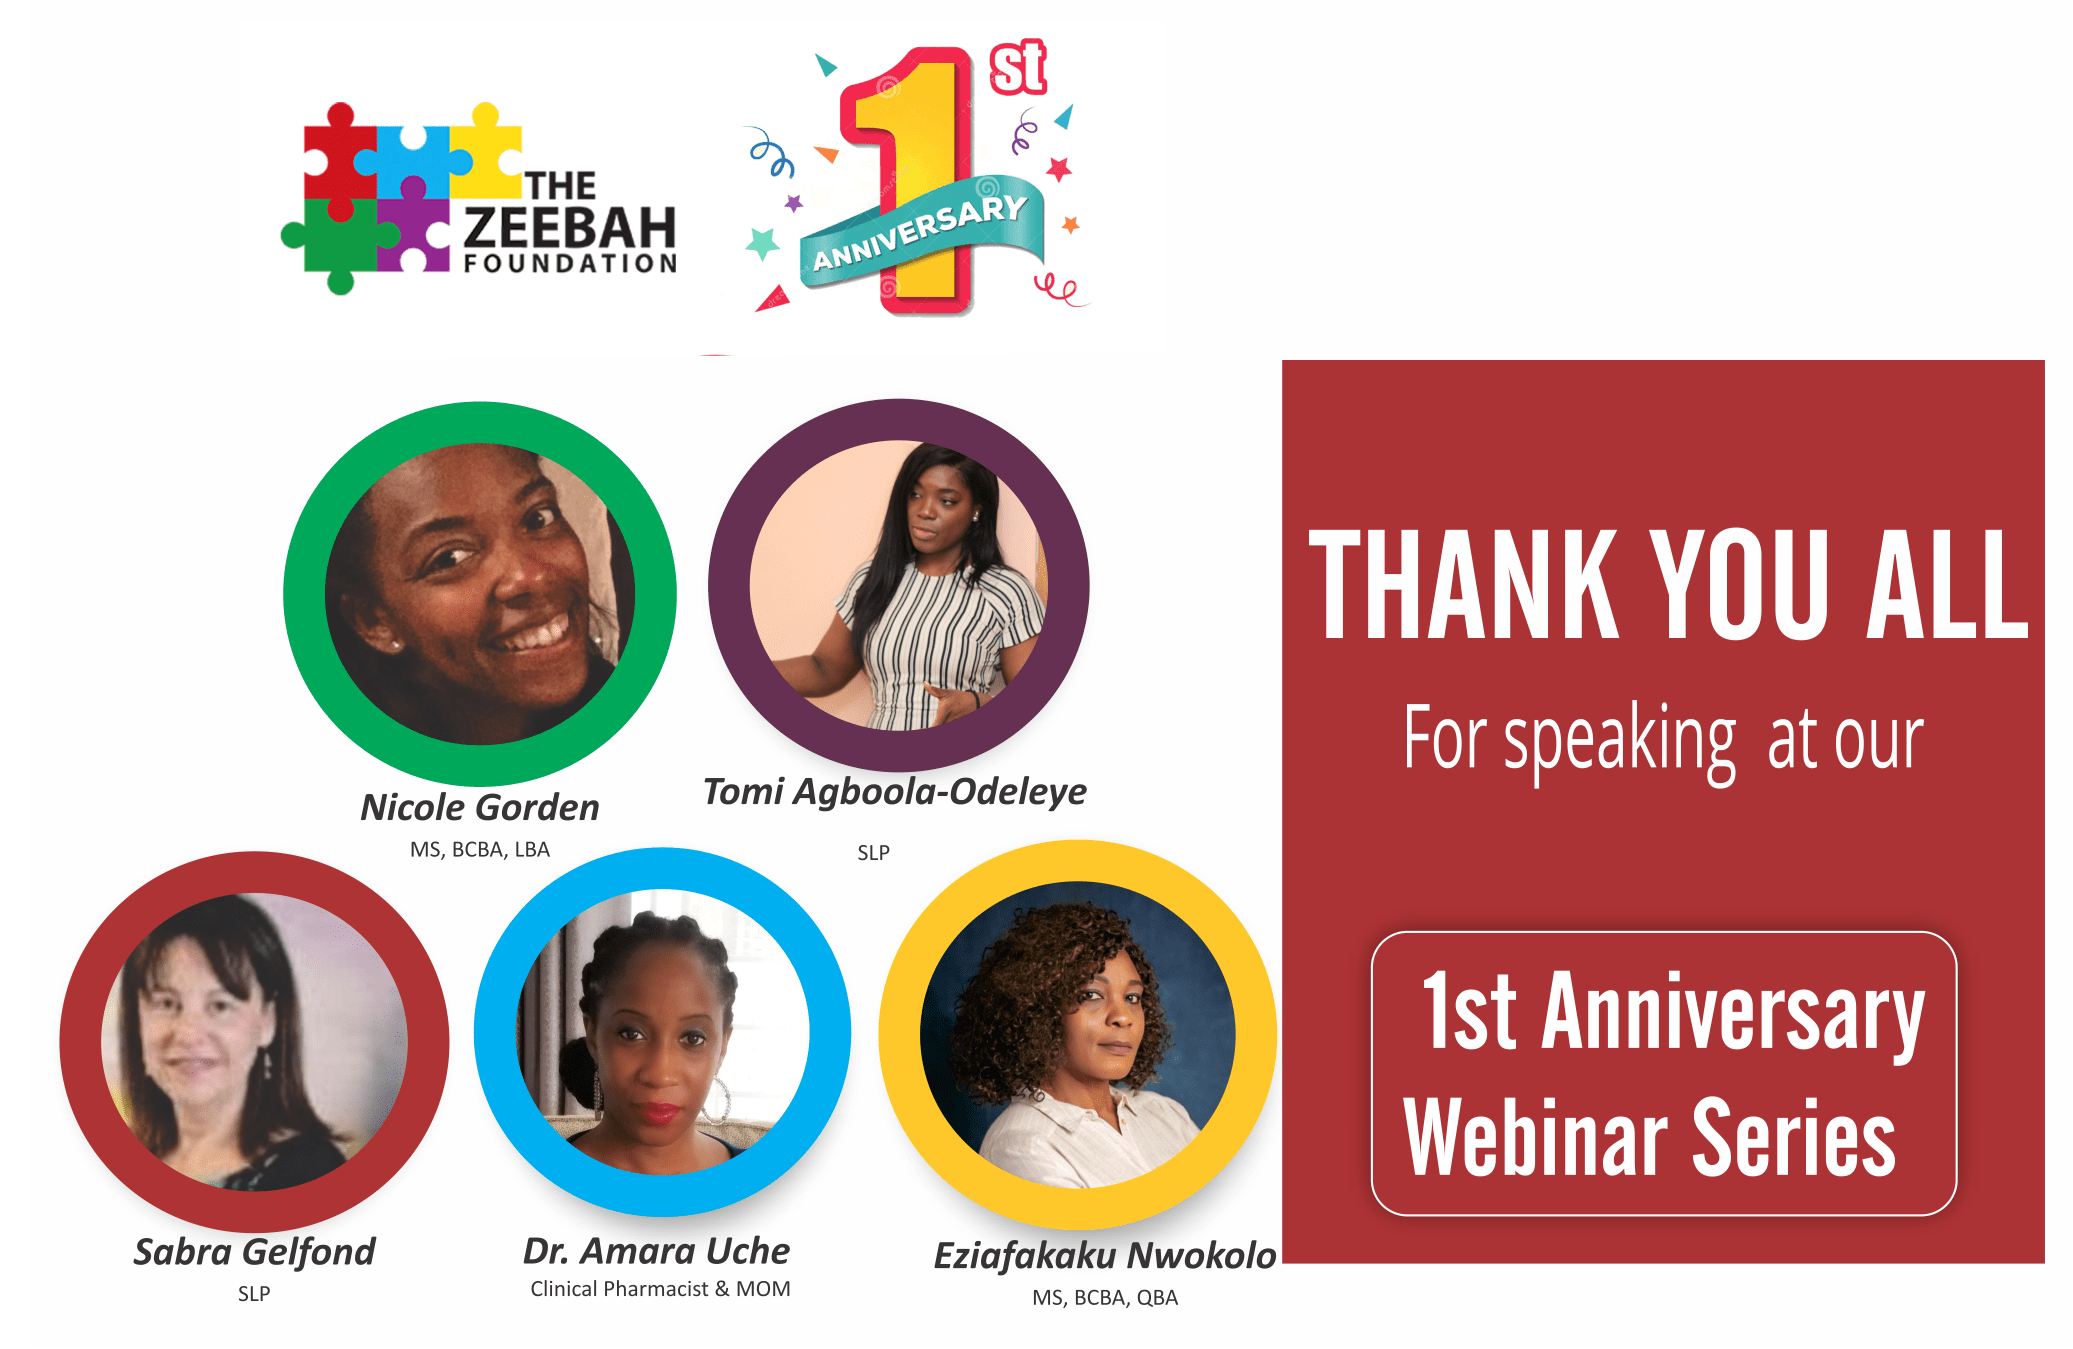 The Zeebah Foundation First Anniversary Webinar Series